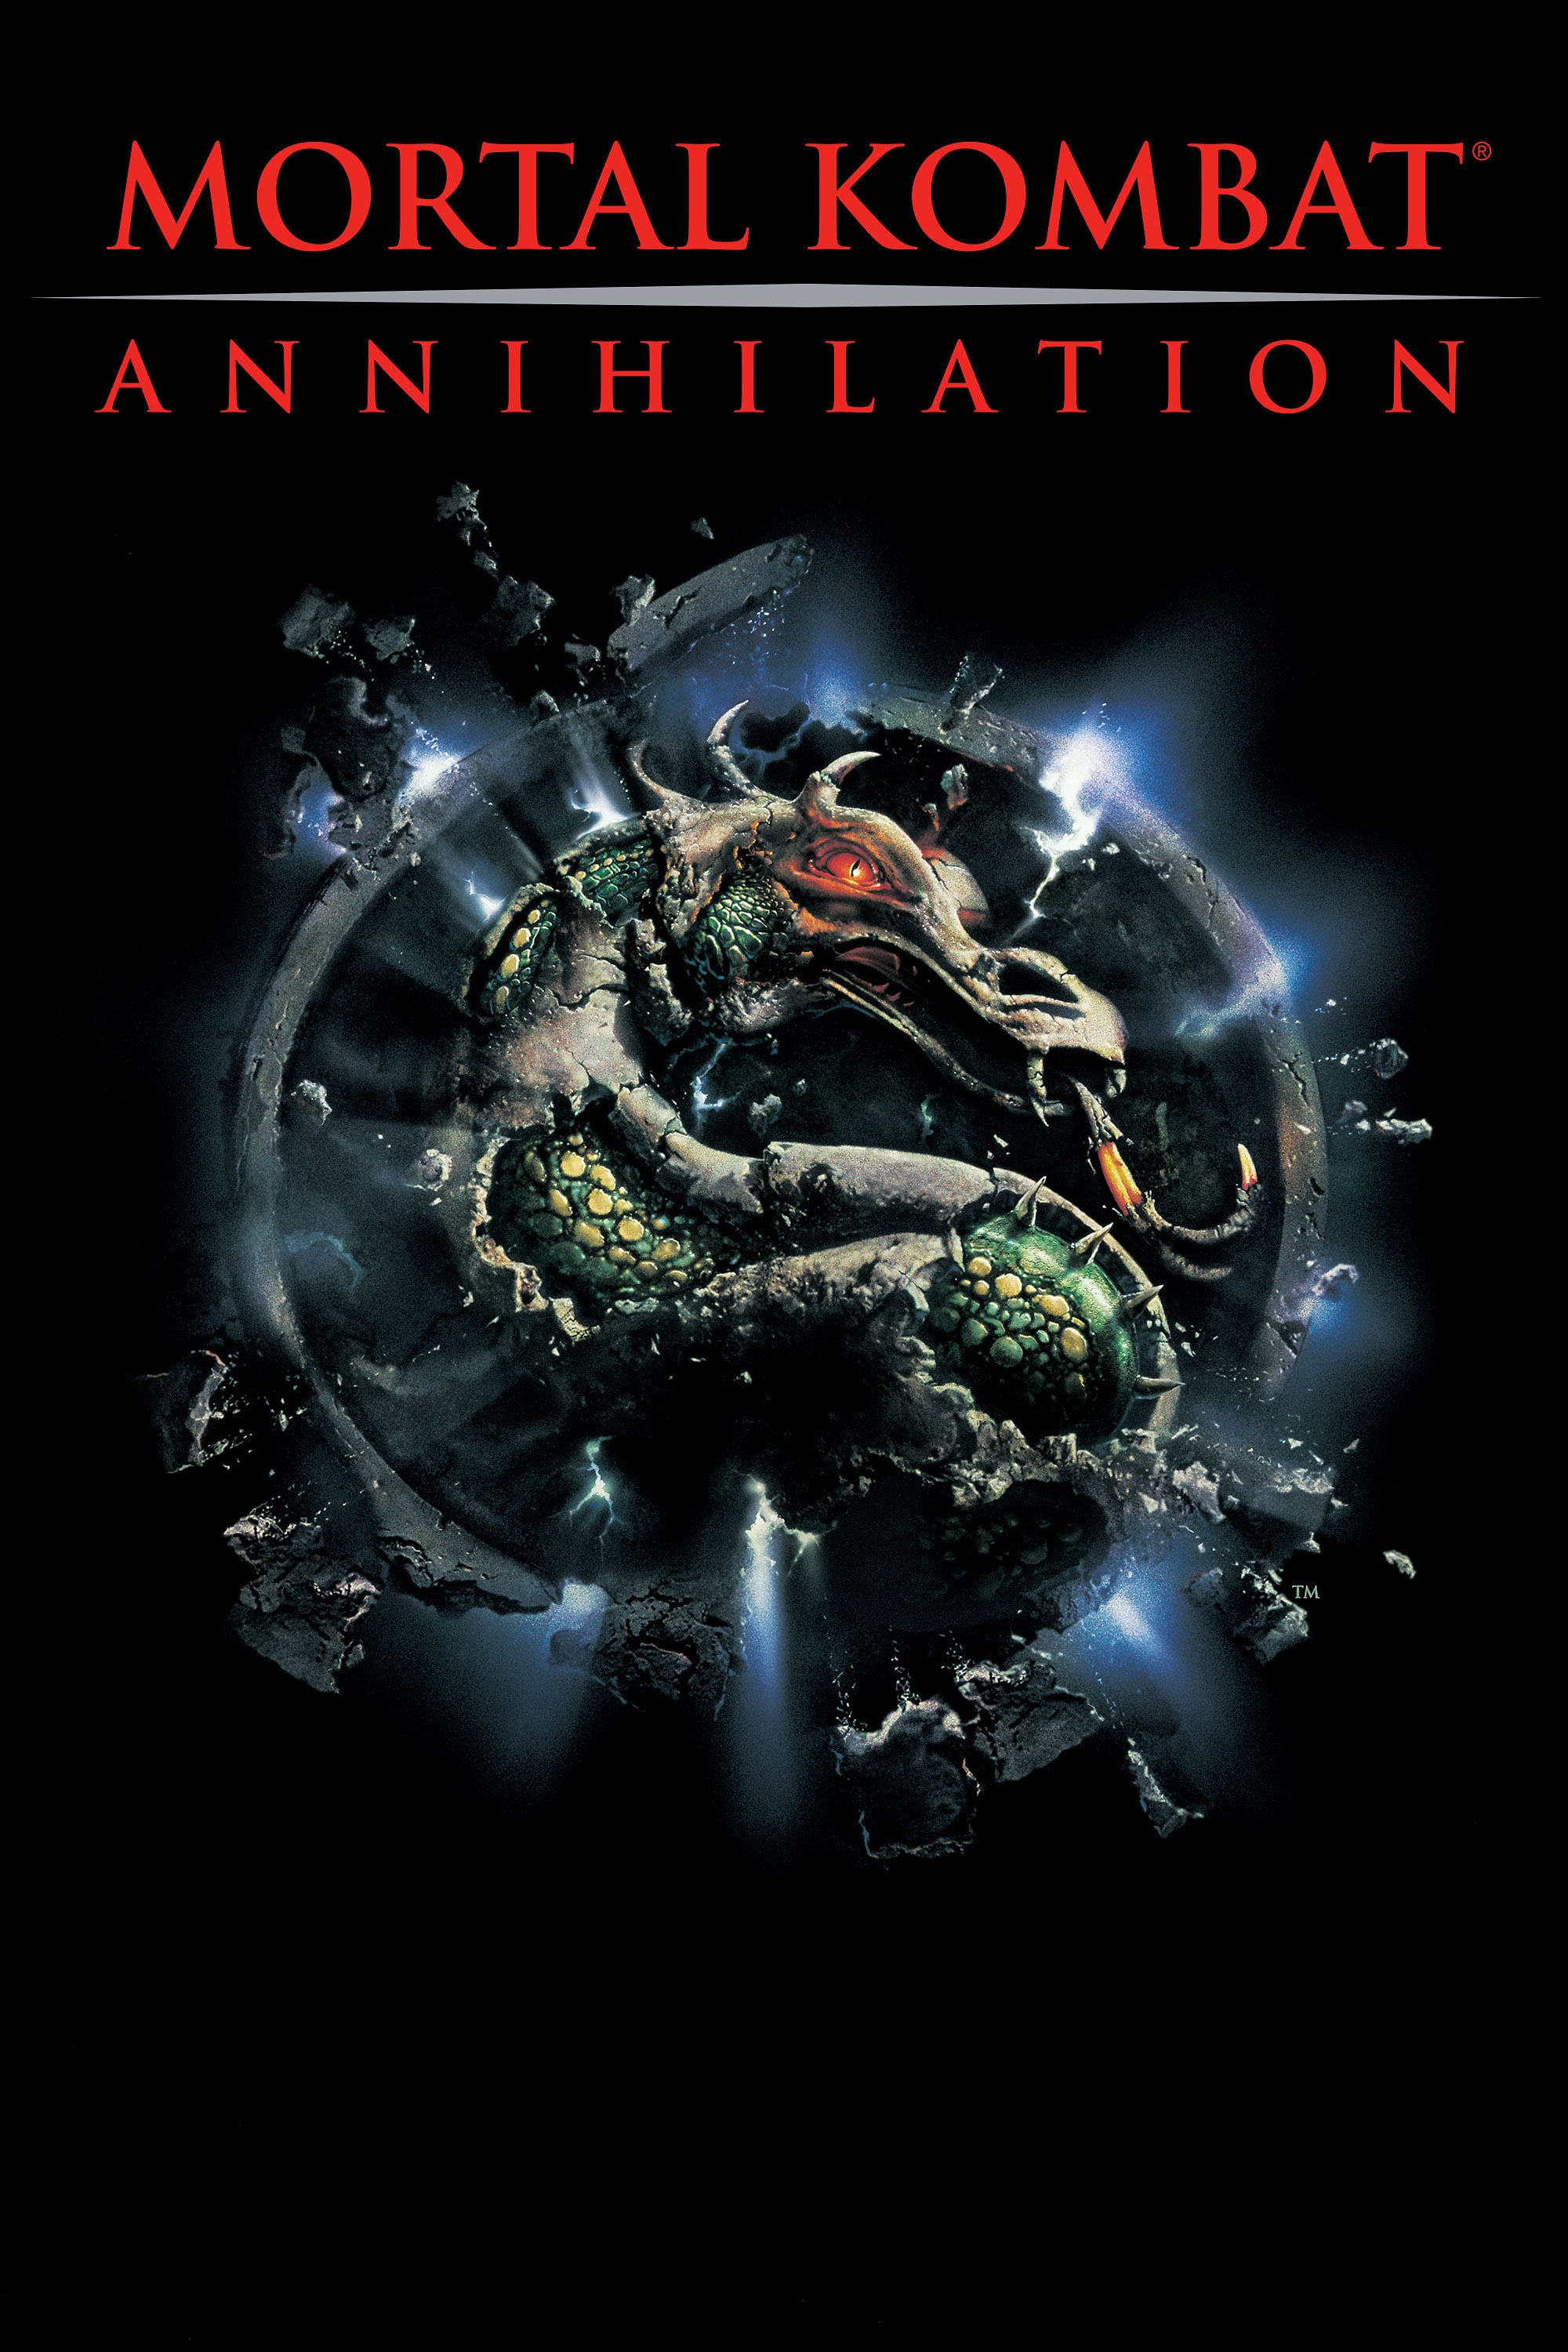 mortal kombat annihilation movie 1997